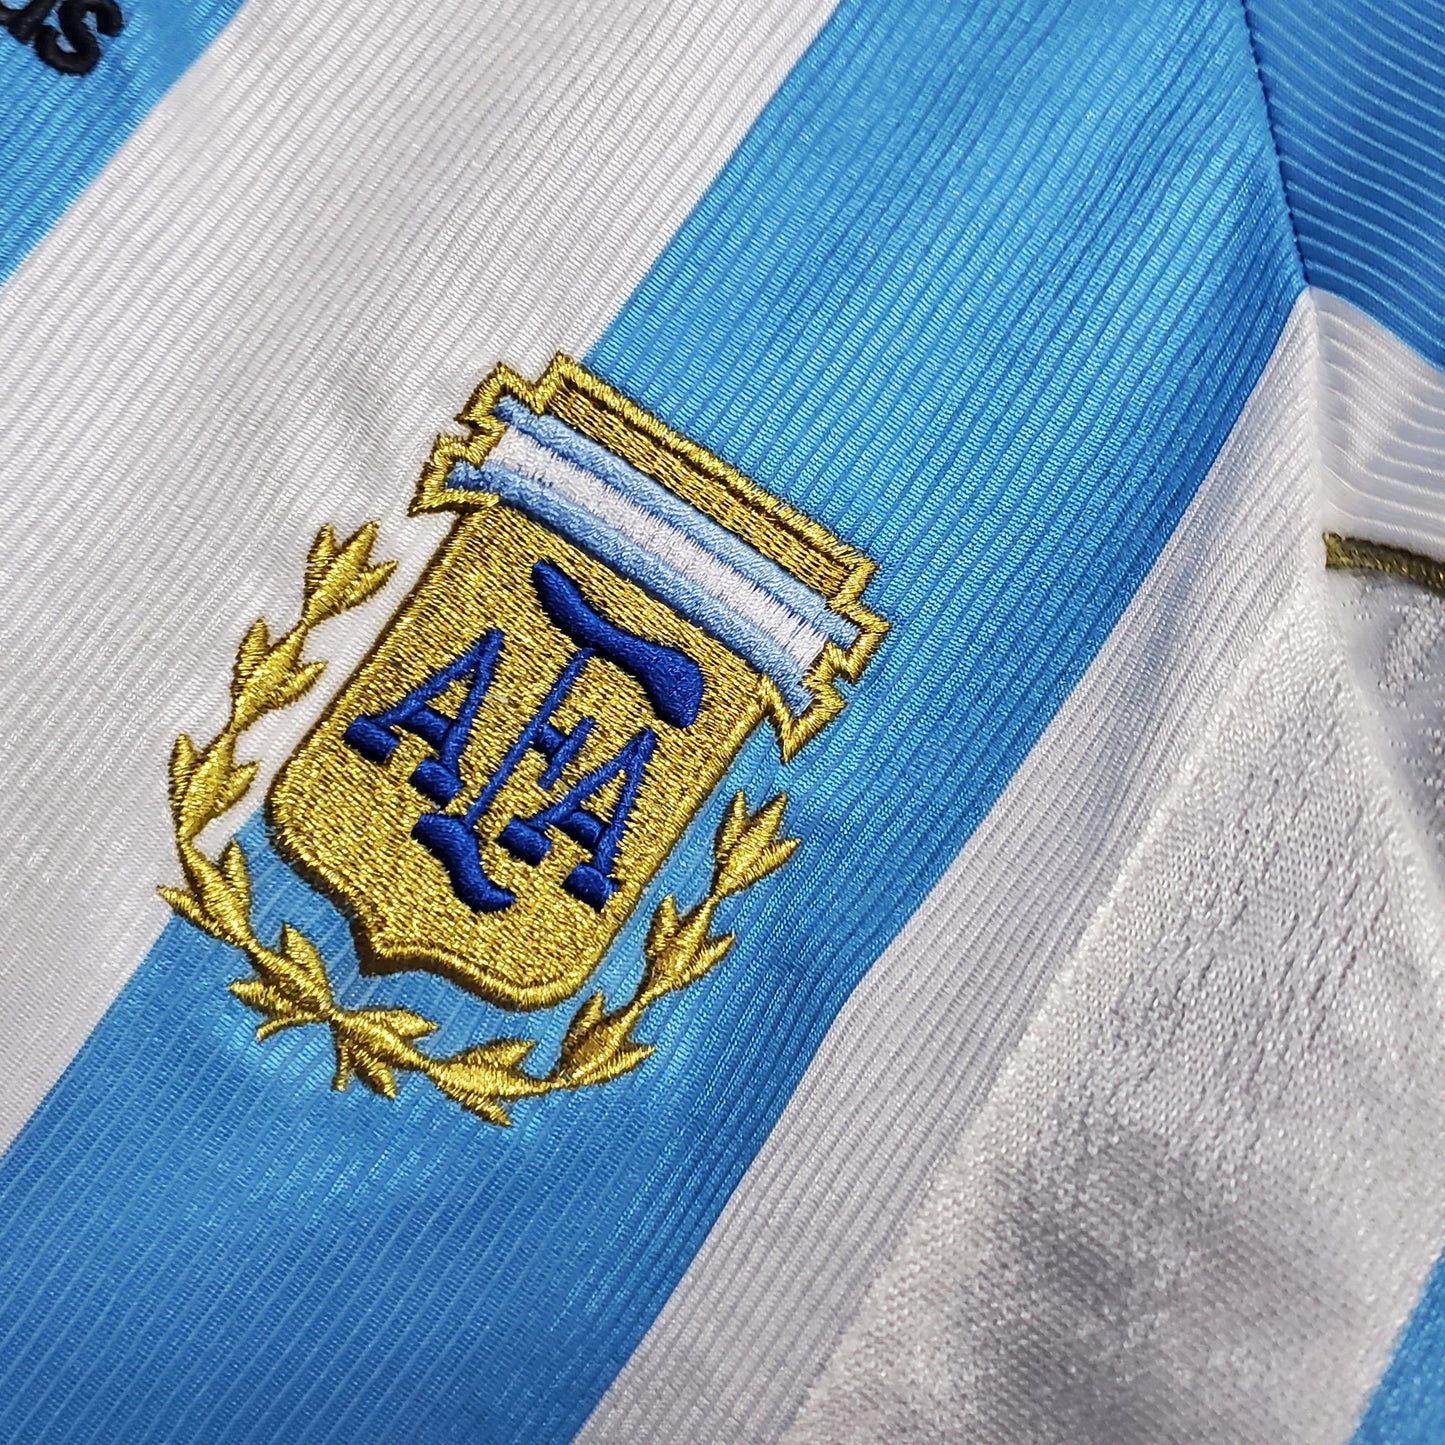 Argentina 1998 Home Shirt